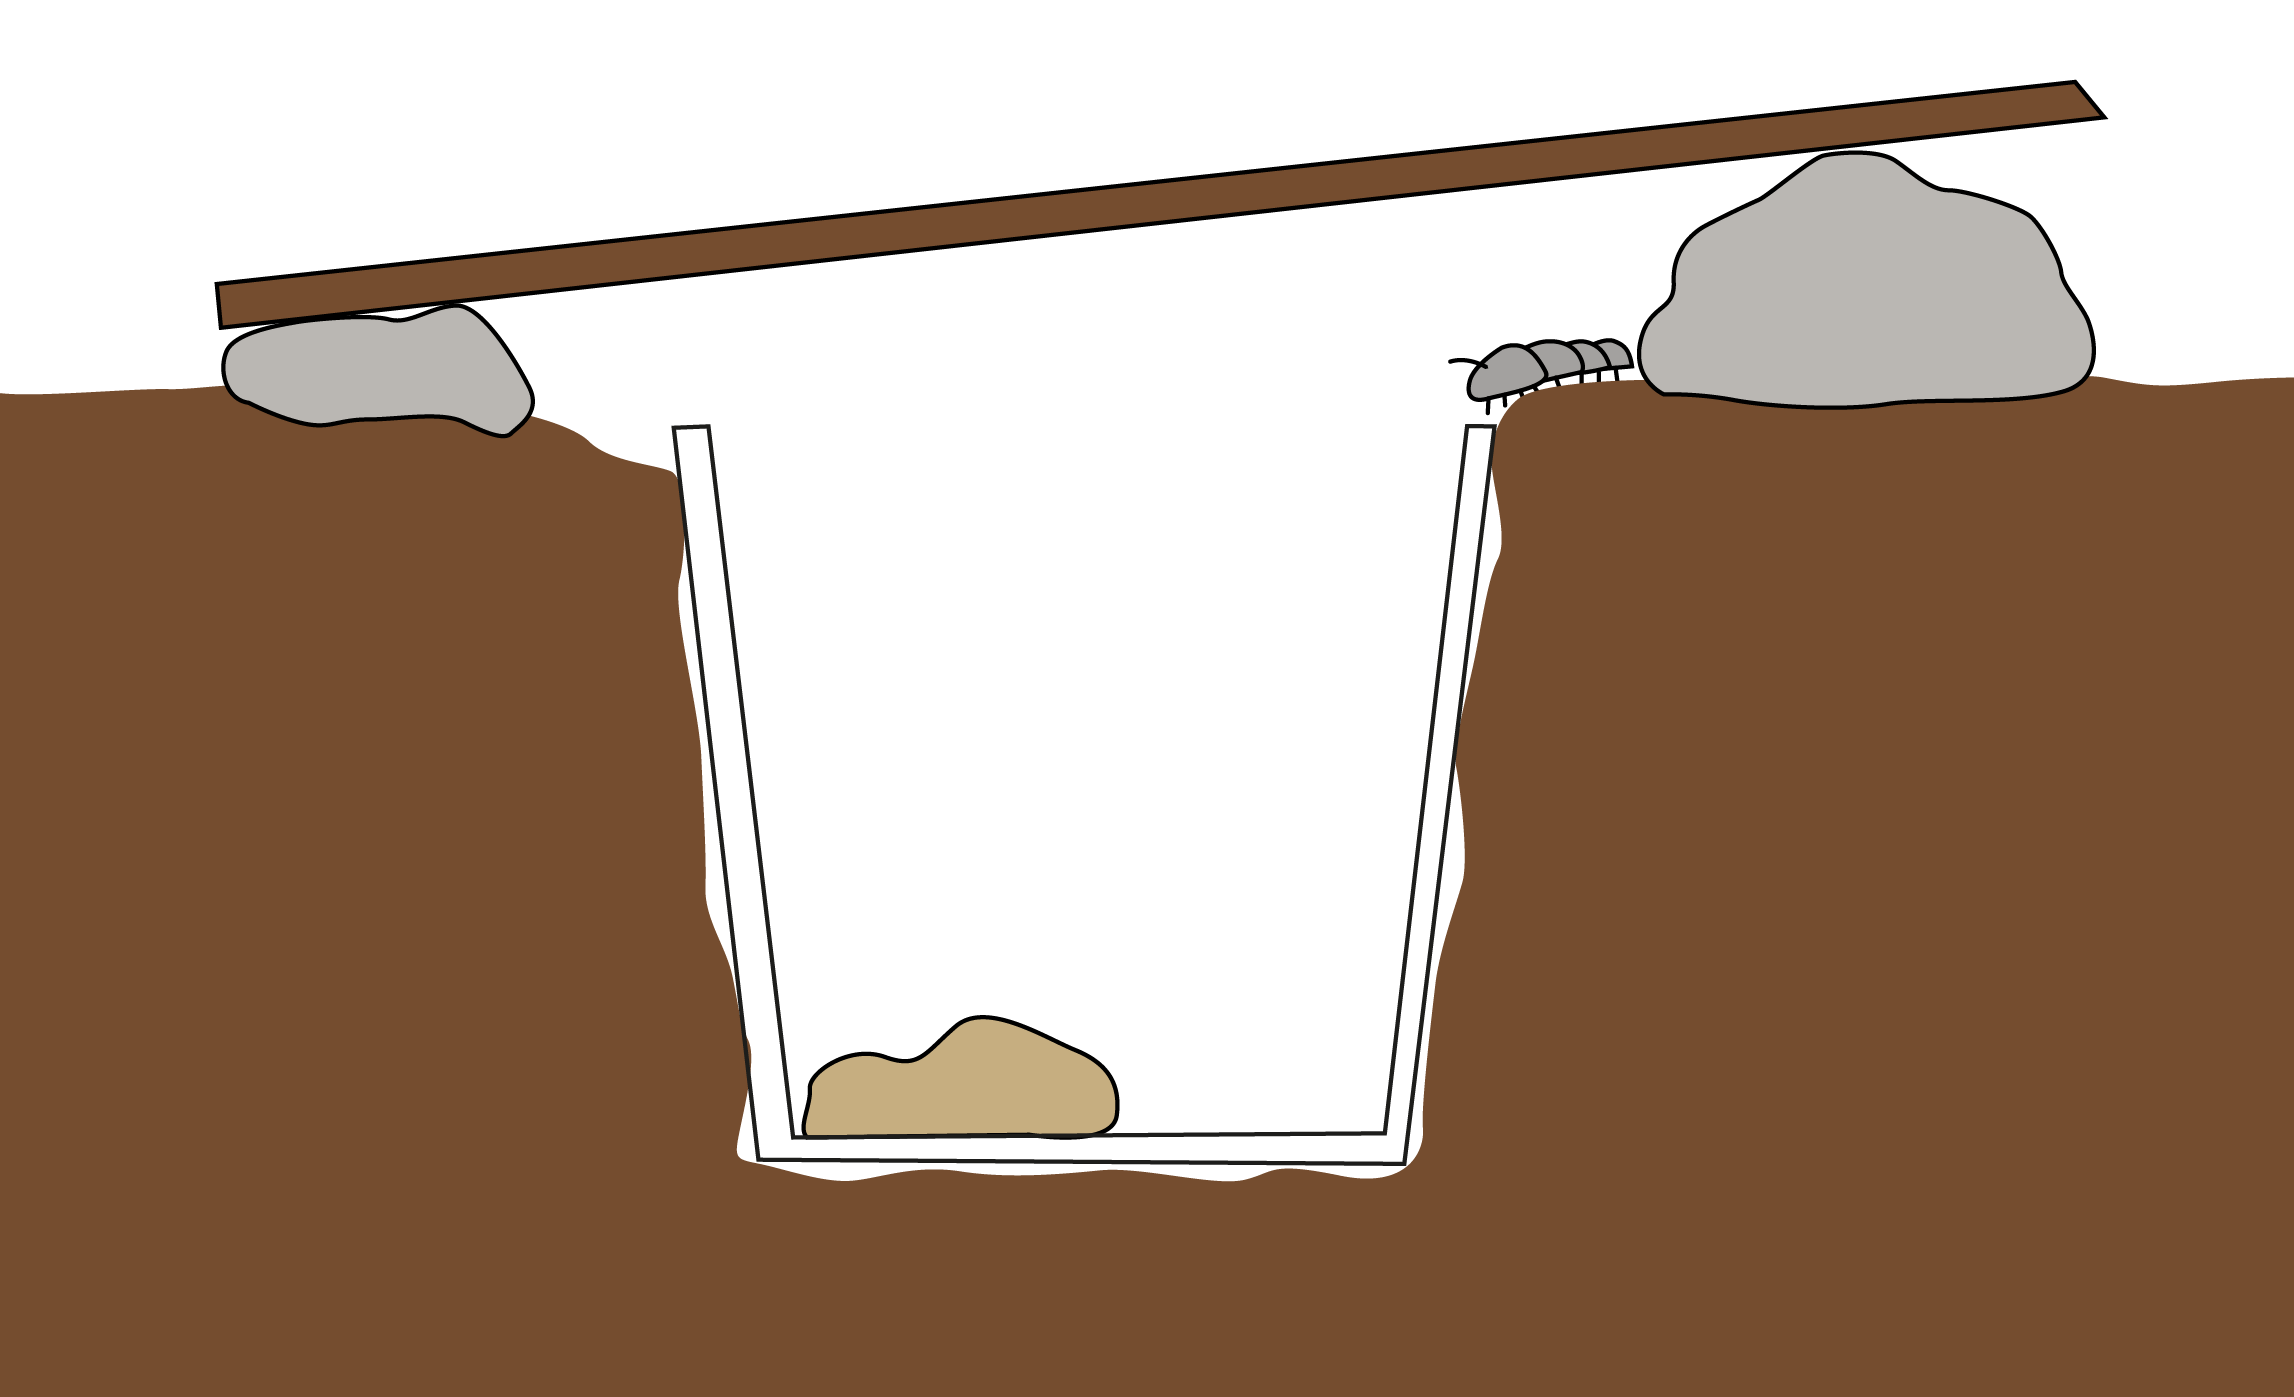 Image of a pitfall trap